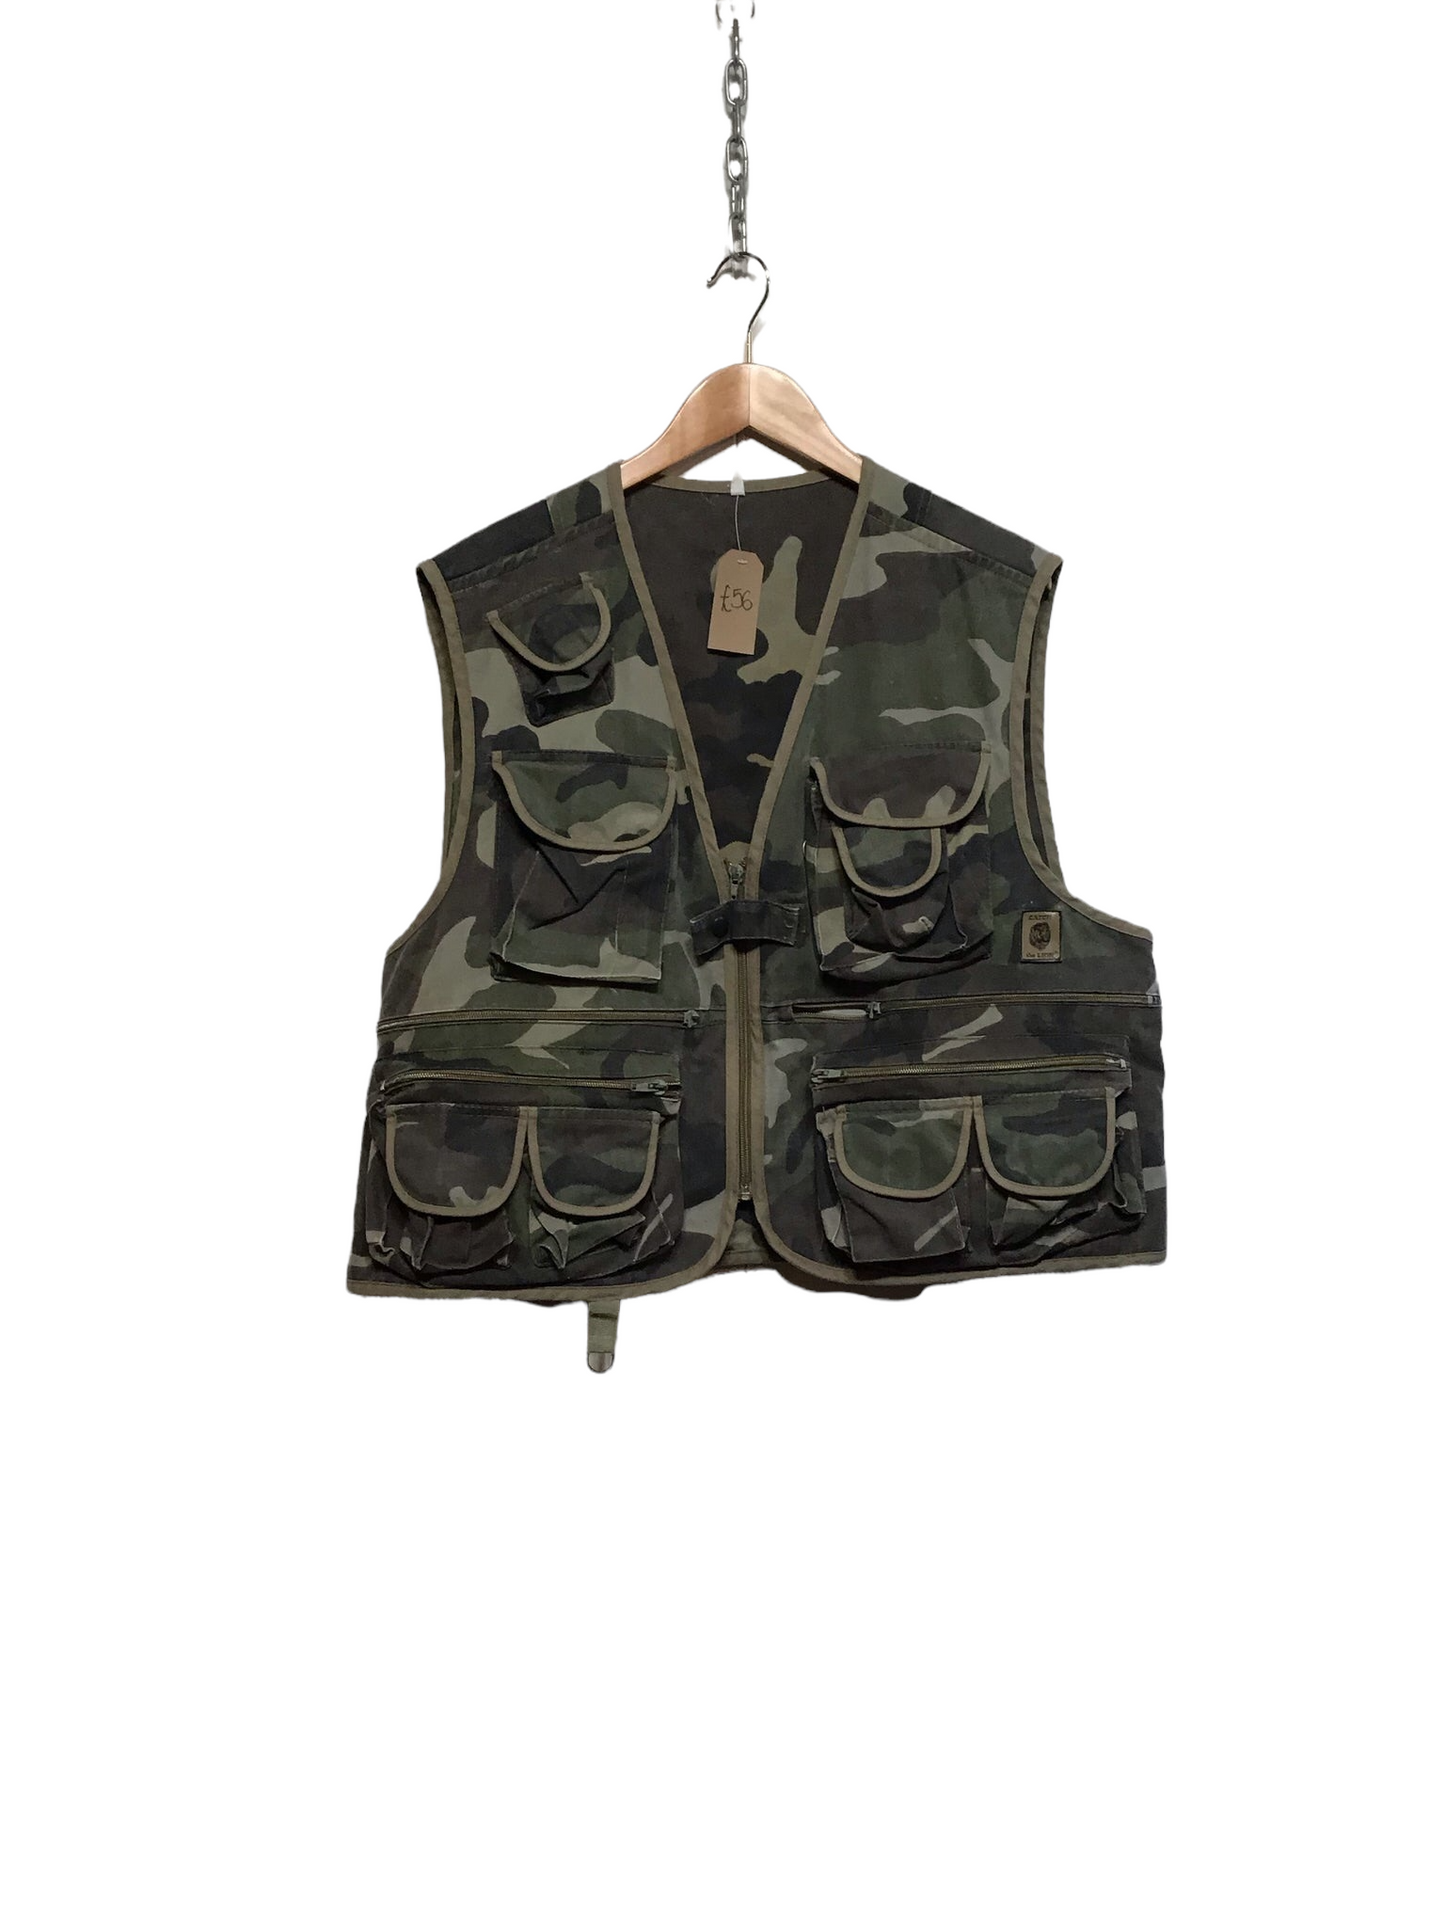 Army Vest (Size XL)